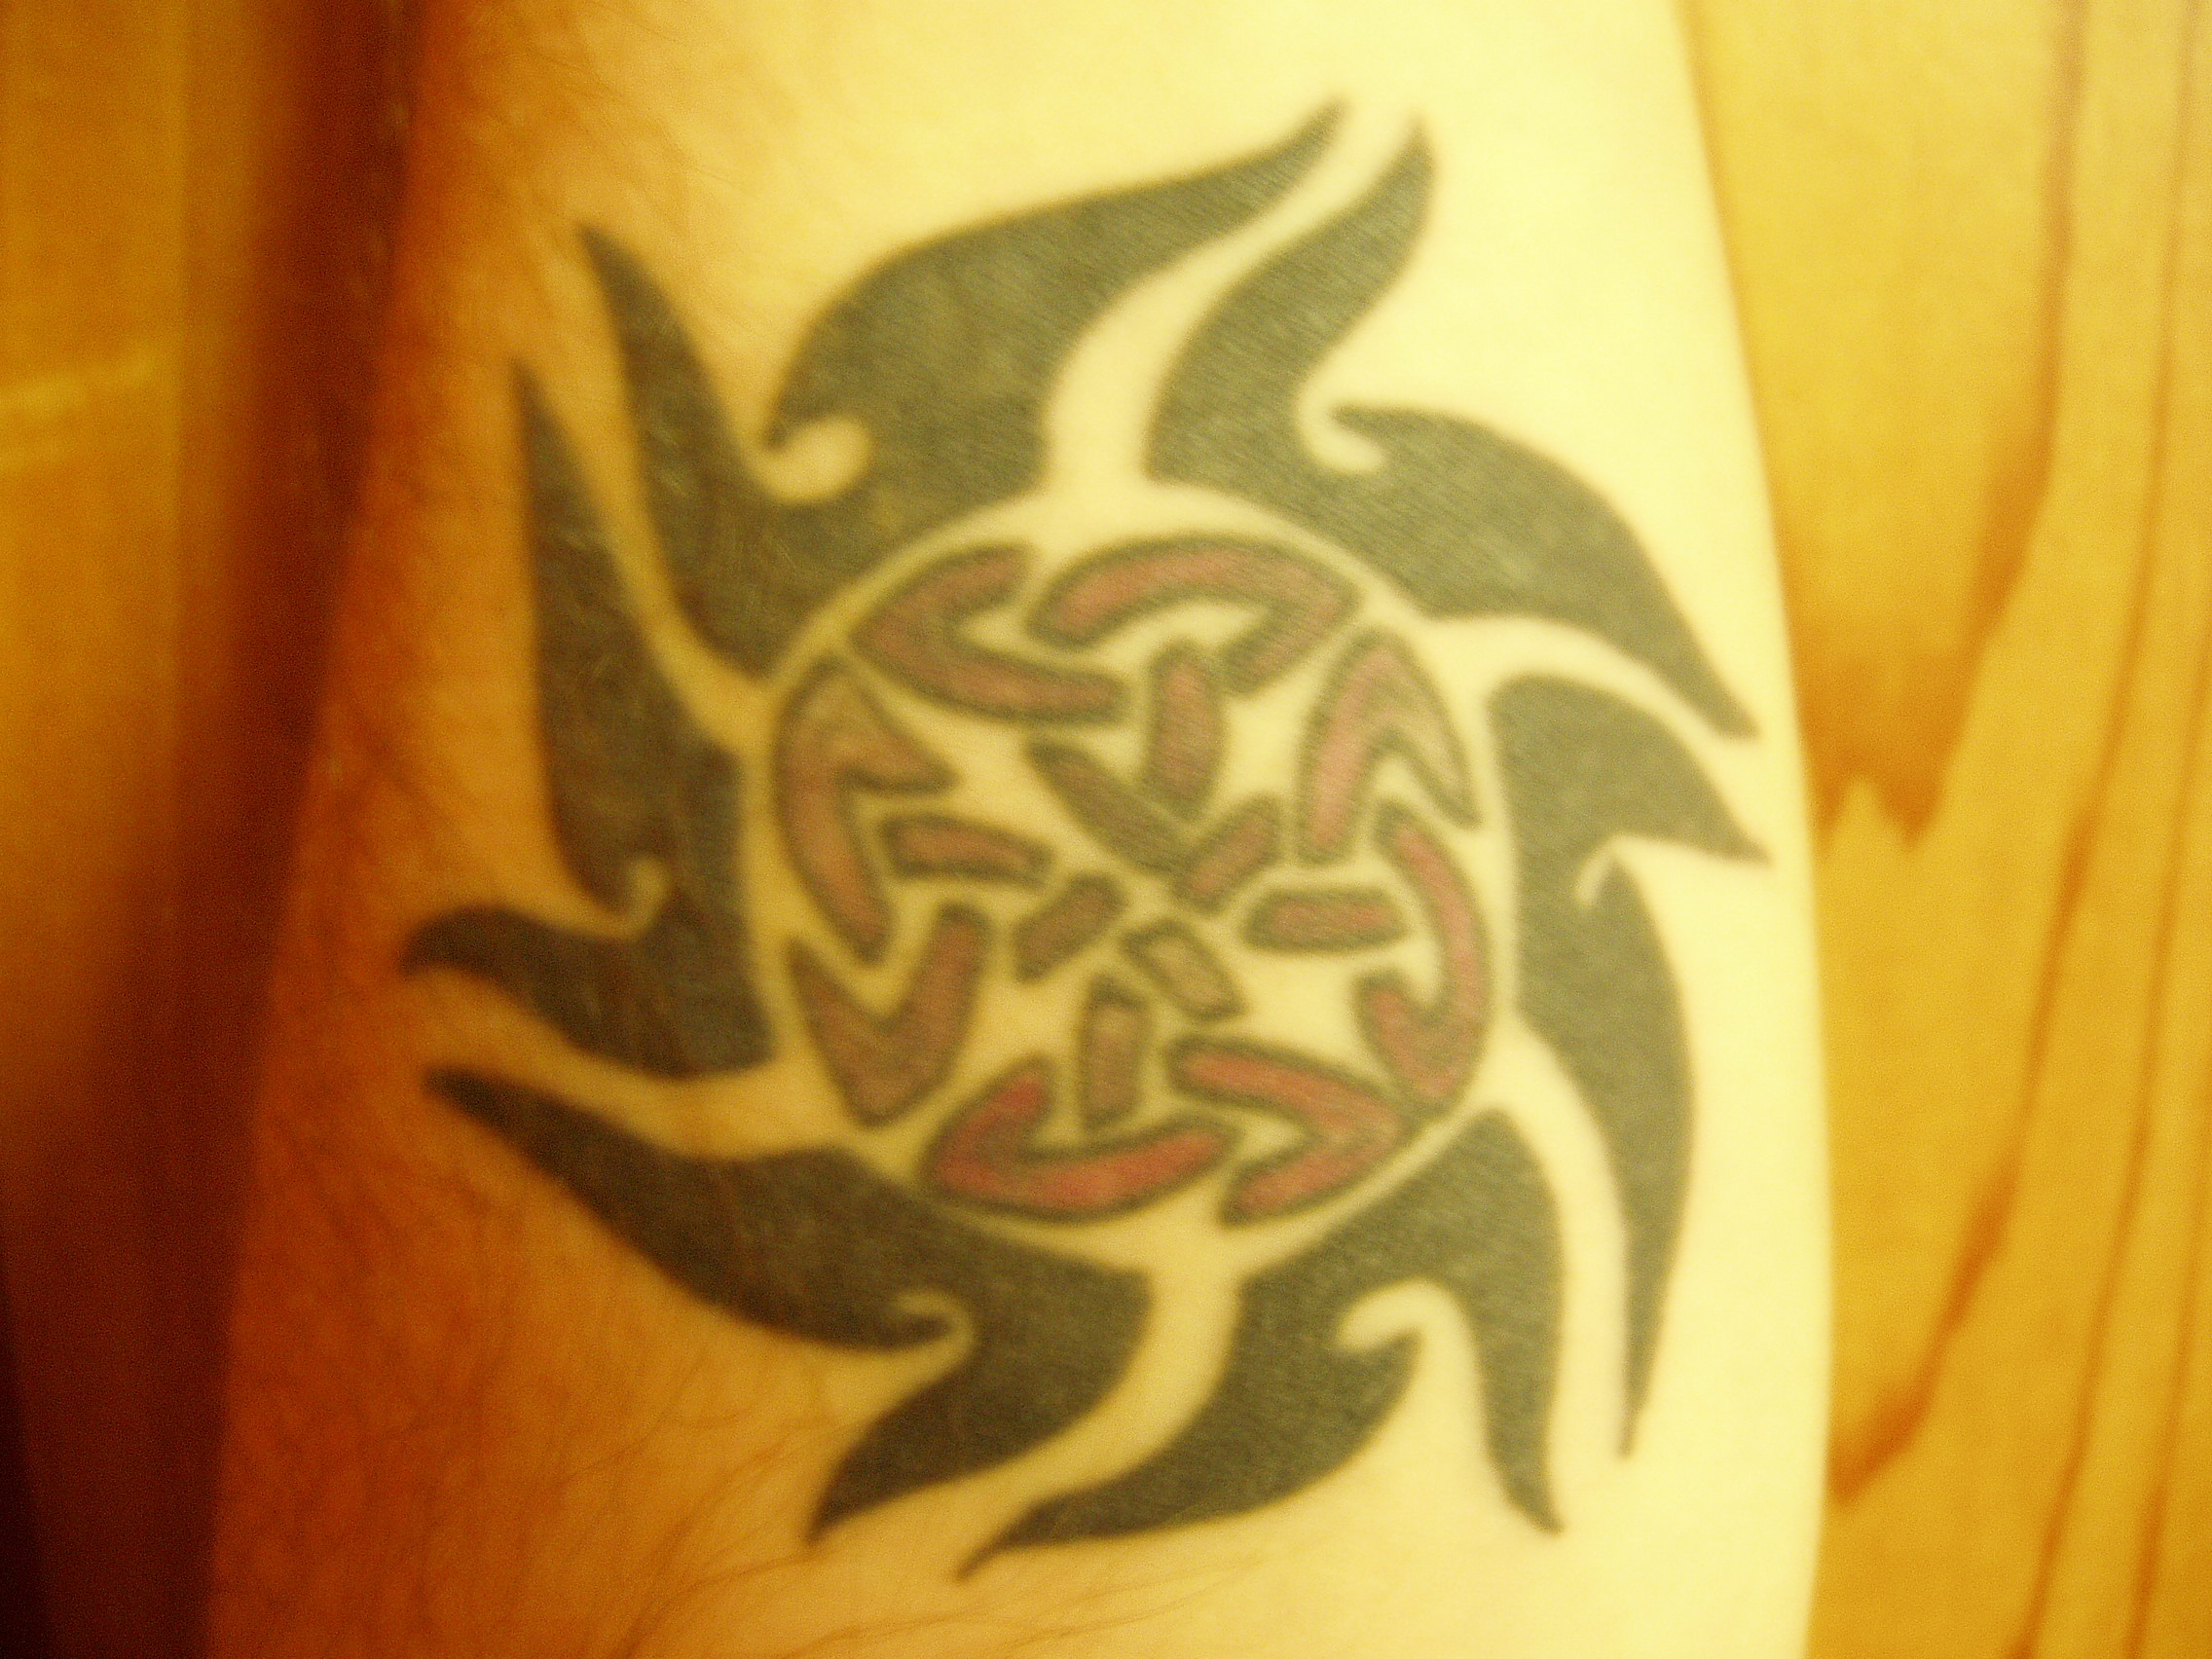 Celtic Sun tattoo